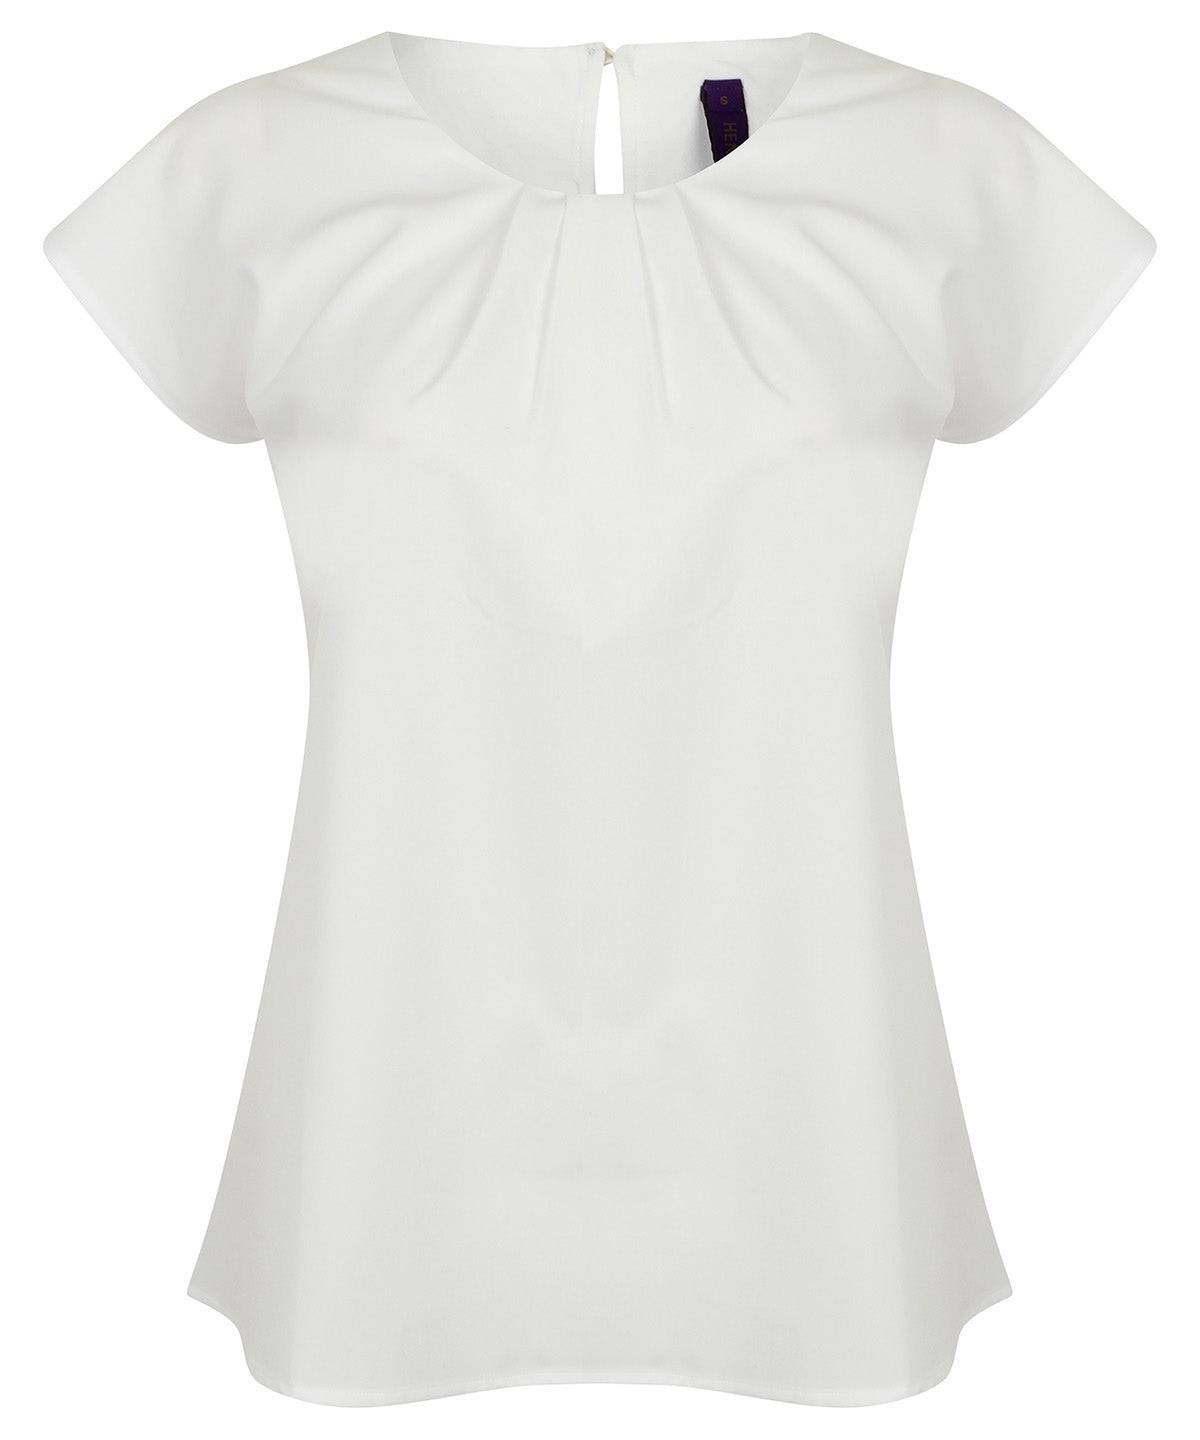 White - Women's pleat front short sleeve blouse